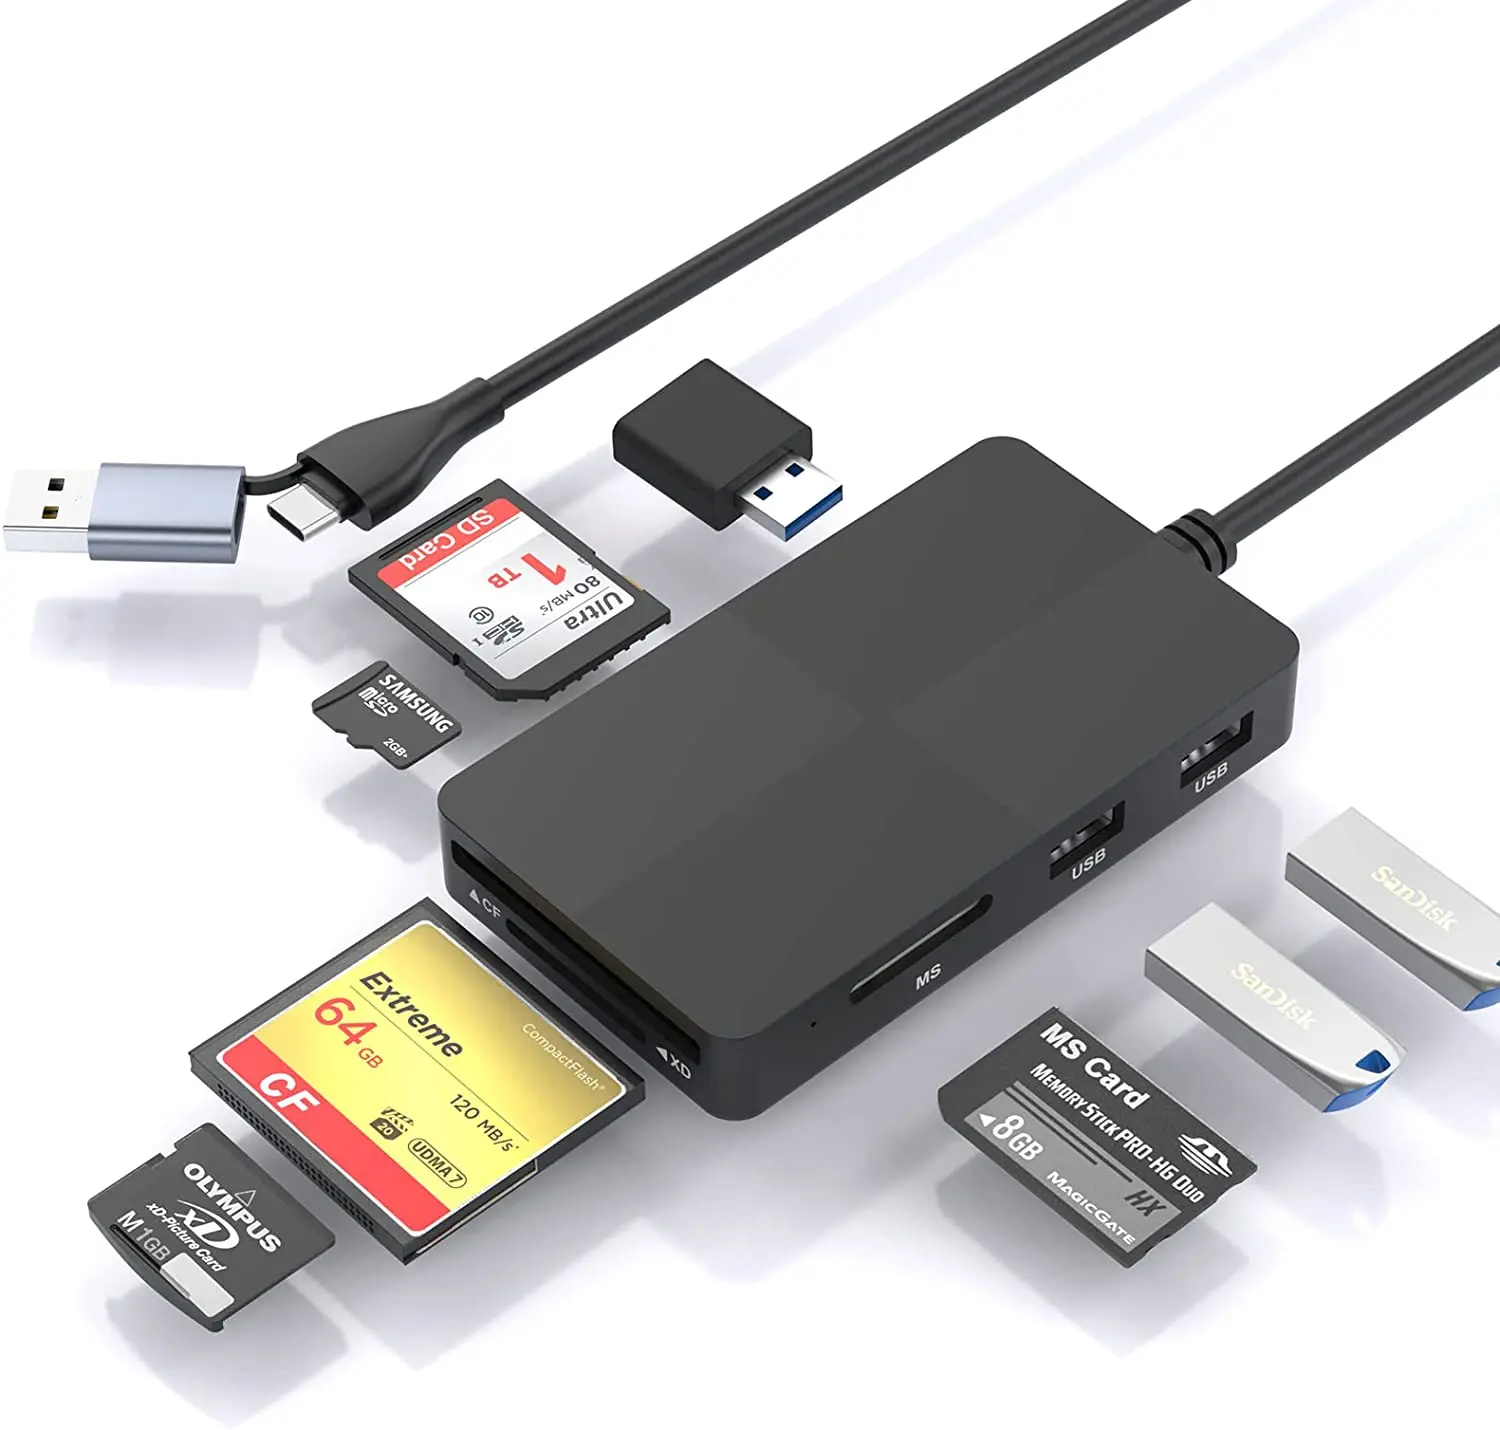 

Rocketek UHS-II All in 1 Universal Simultaneous Memory MS XD CF TF USB3.0 Type C Multi Hub Adapter Card Reader